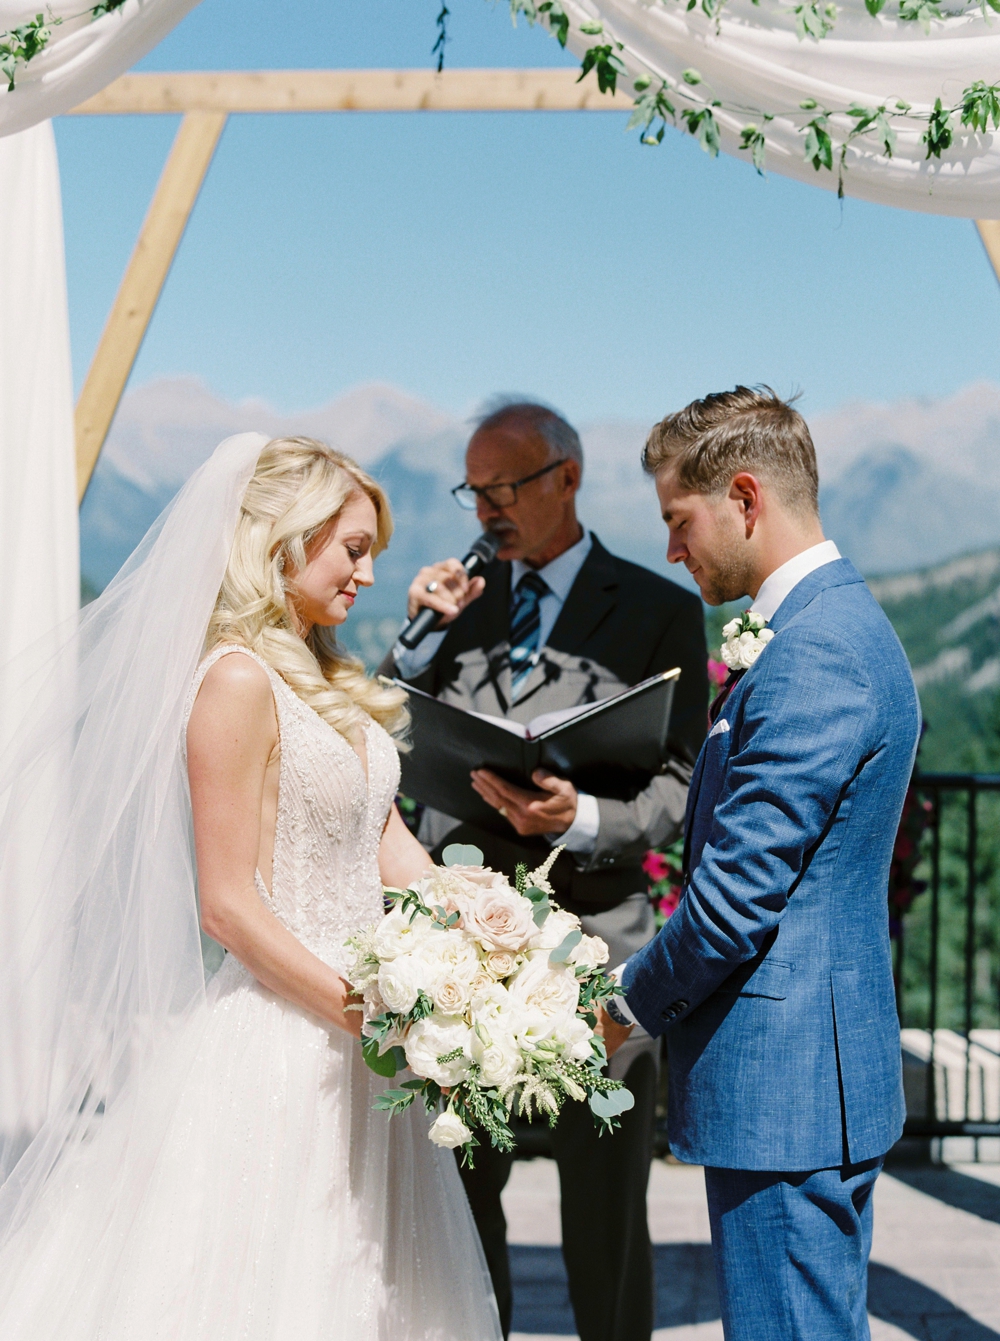 Wedding ceremony floral arch way decor at the Fairmont Banff Springs Hotel | Banff Rocky Mountain Wedding Photographers | Justine Milton fine art film photography